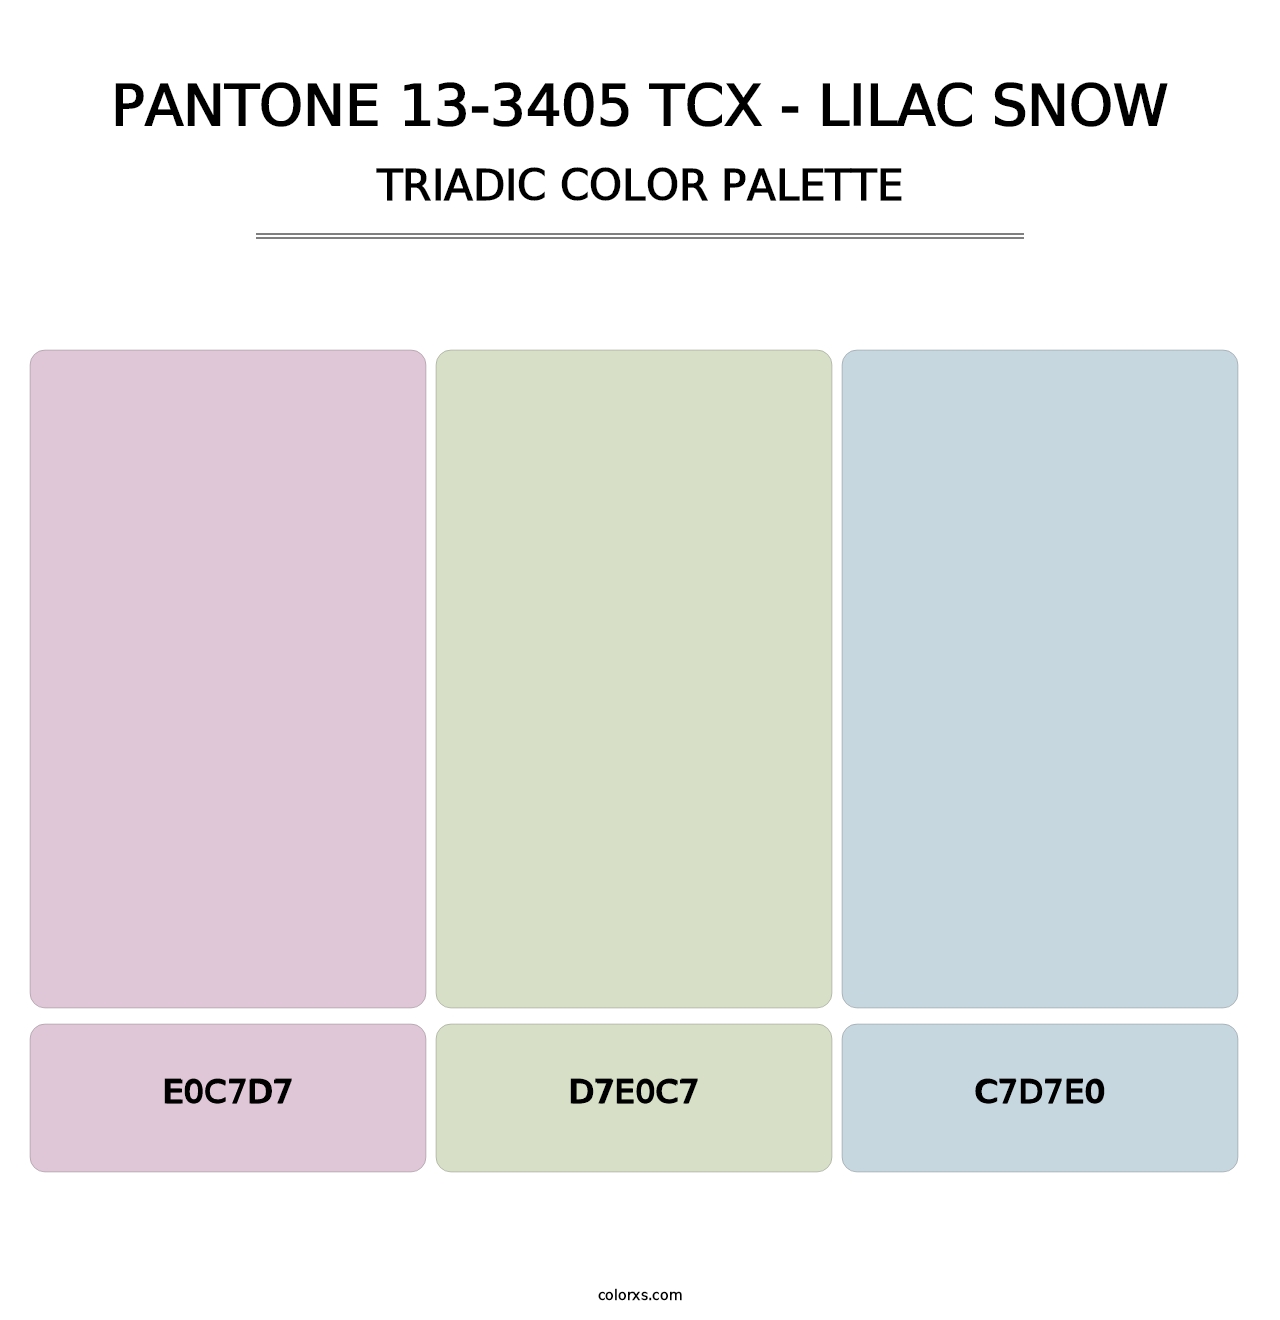 PANTONE 13-3405 TCX - Lilac Snow - Triadic Color Palette